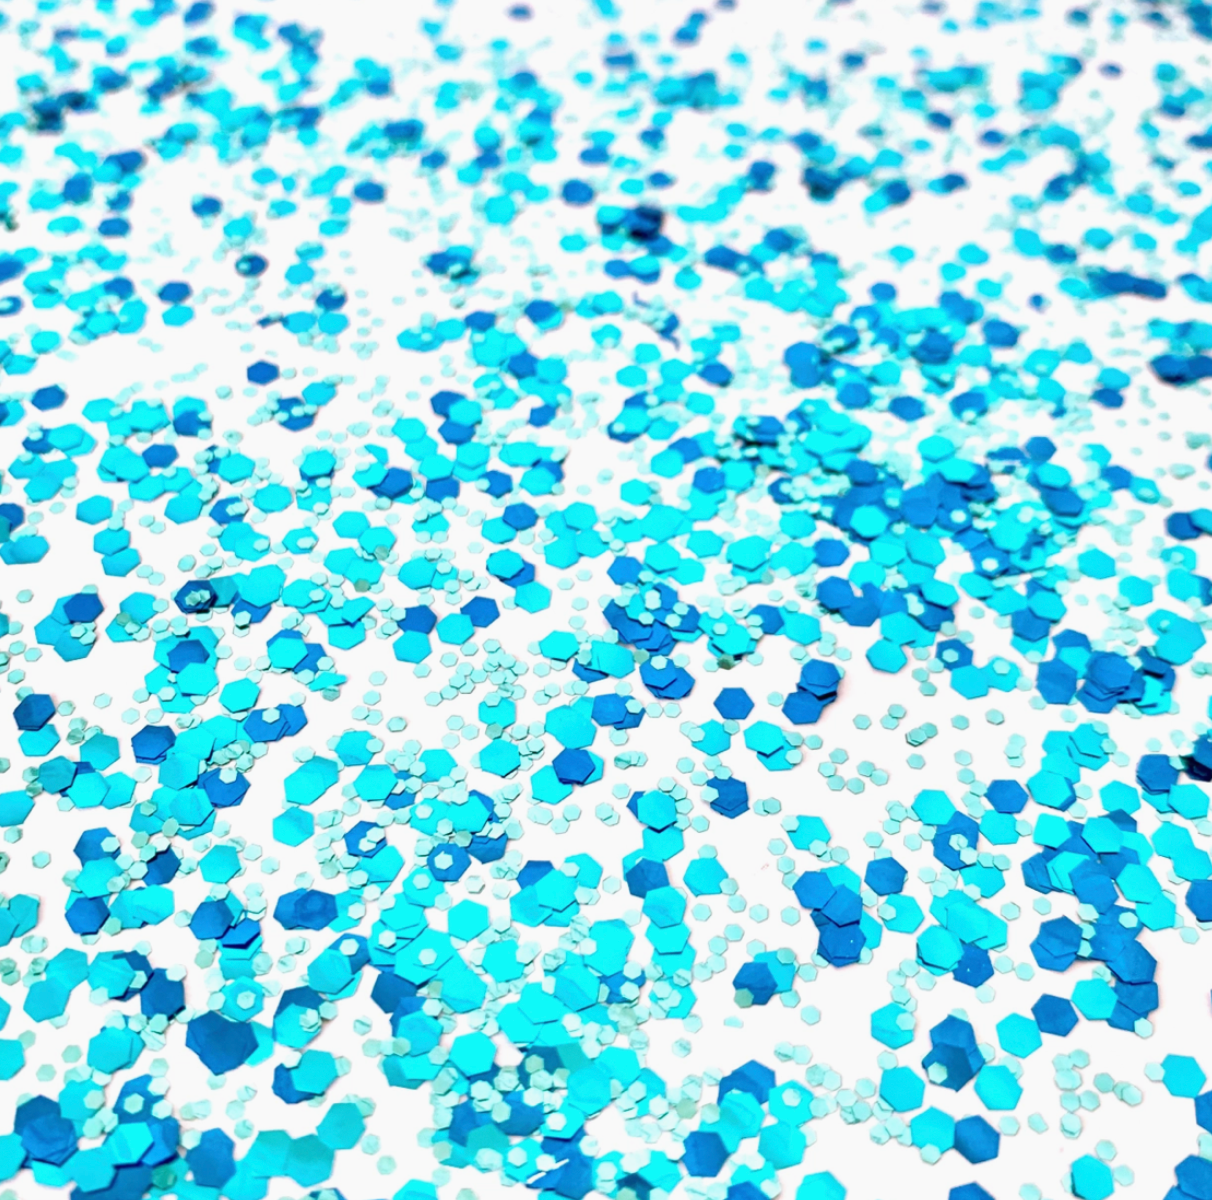 Biodegradable Festival Glitter Pouch